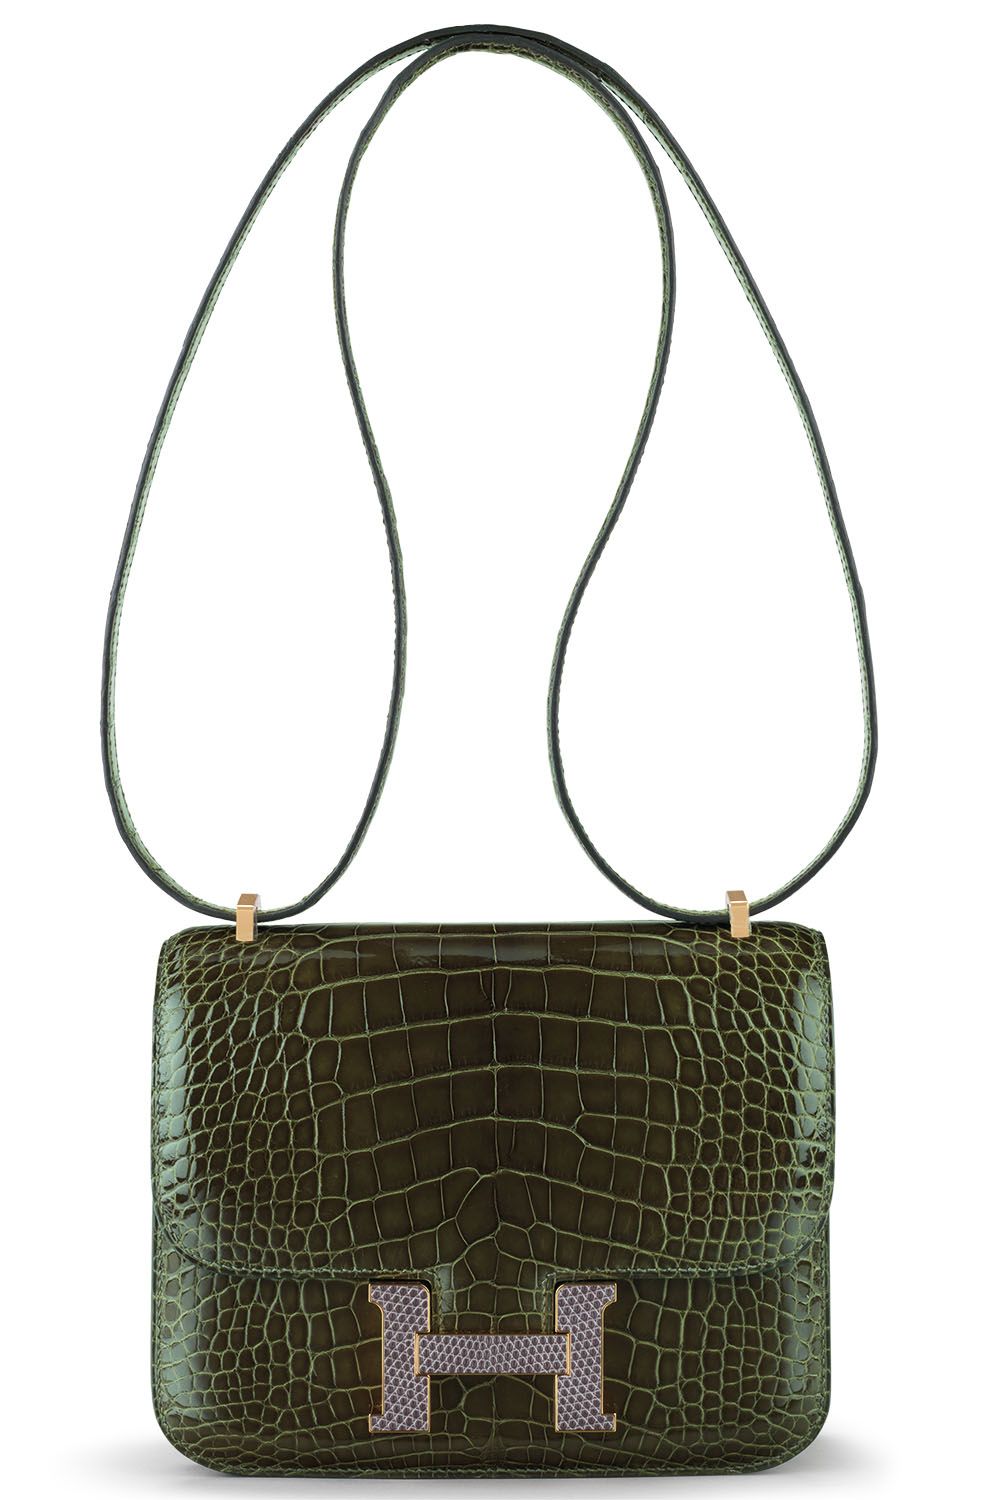 Hermès Birkin bag sells for £162,500 in London auction, Handbags